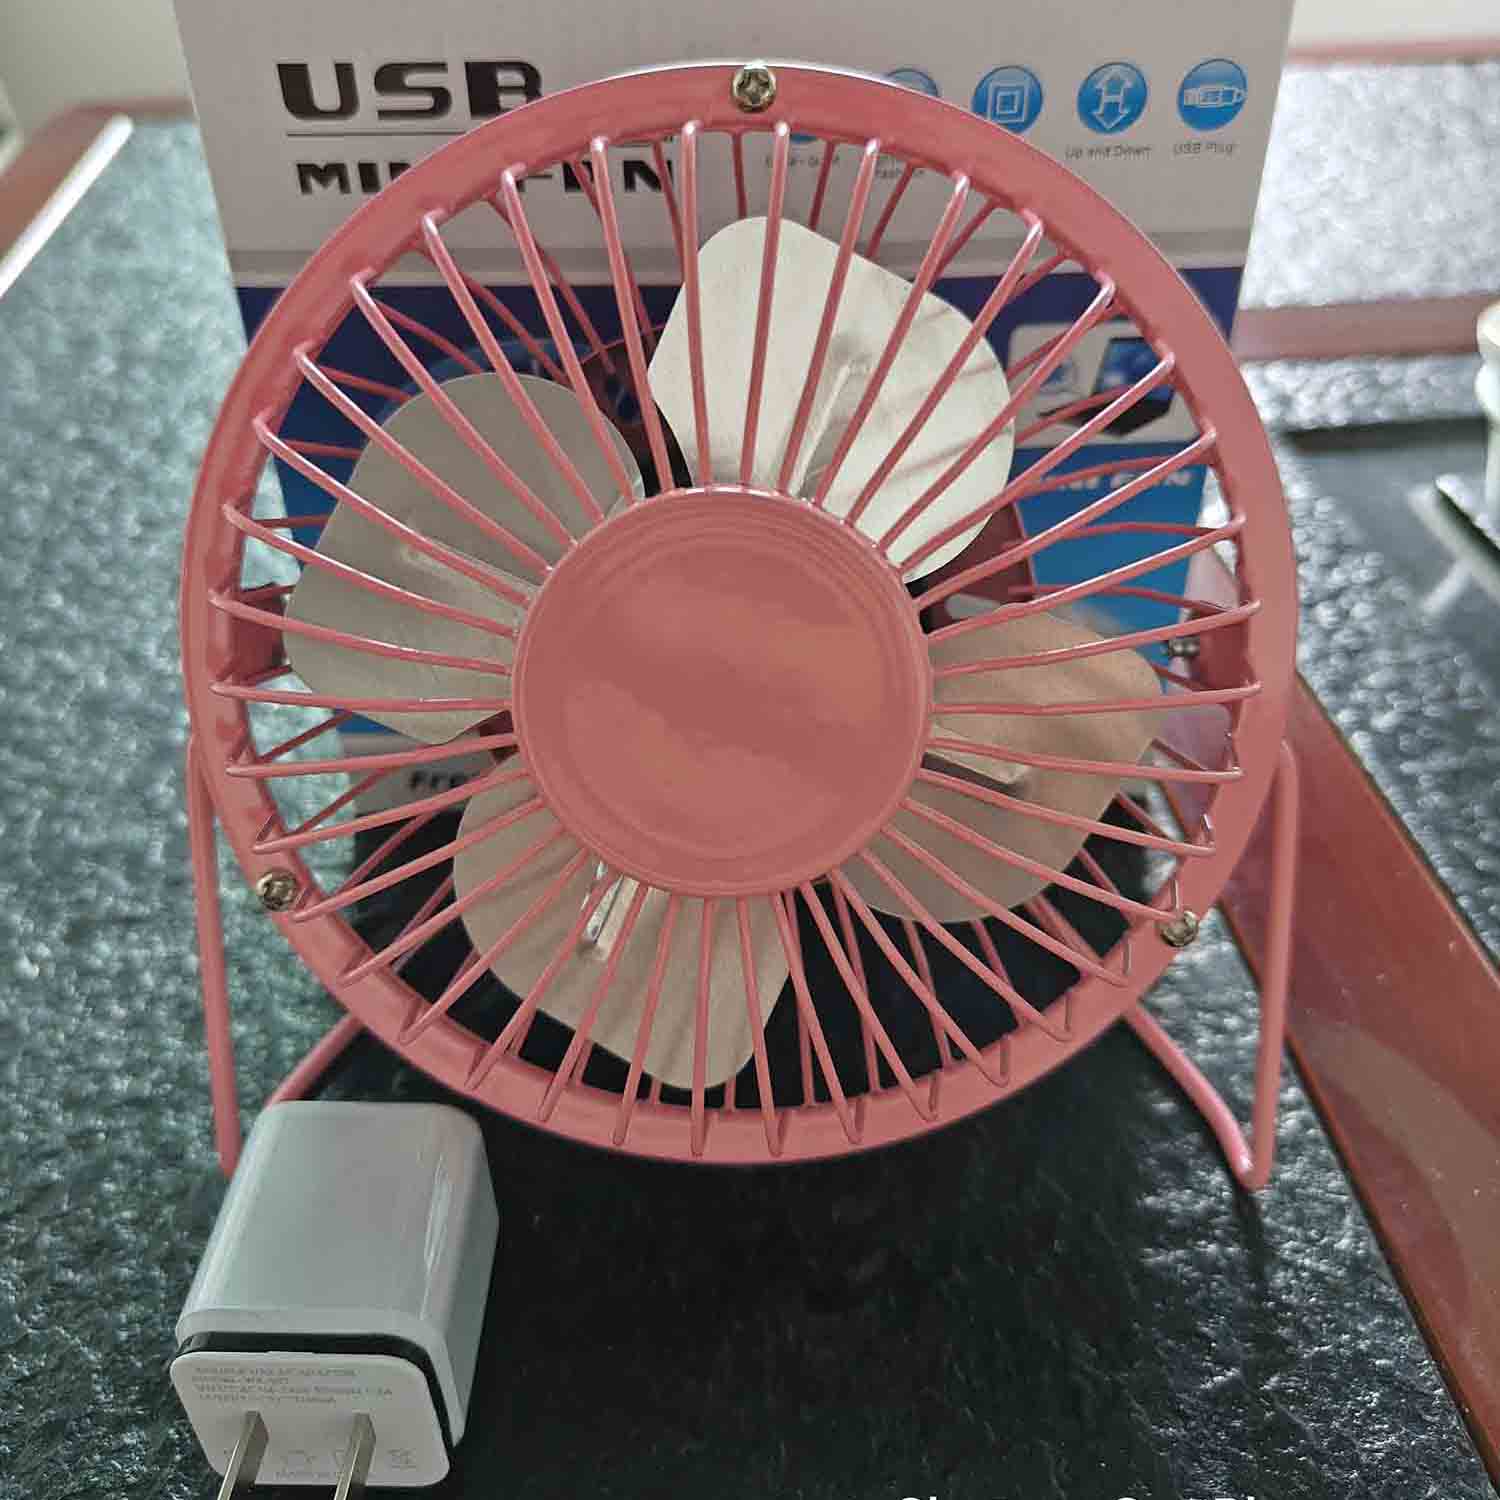 Mini USB Fan Universal Home Office Car Portable Mini Fan Aluminium Small Desk USB 4 Blades Cooler Cooling Fan 4 Inch med Plug